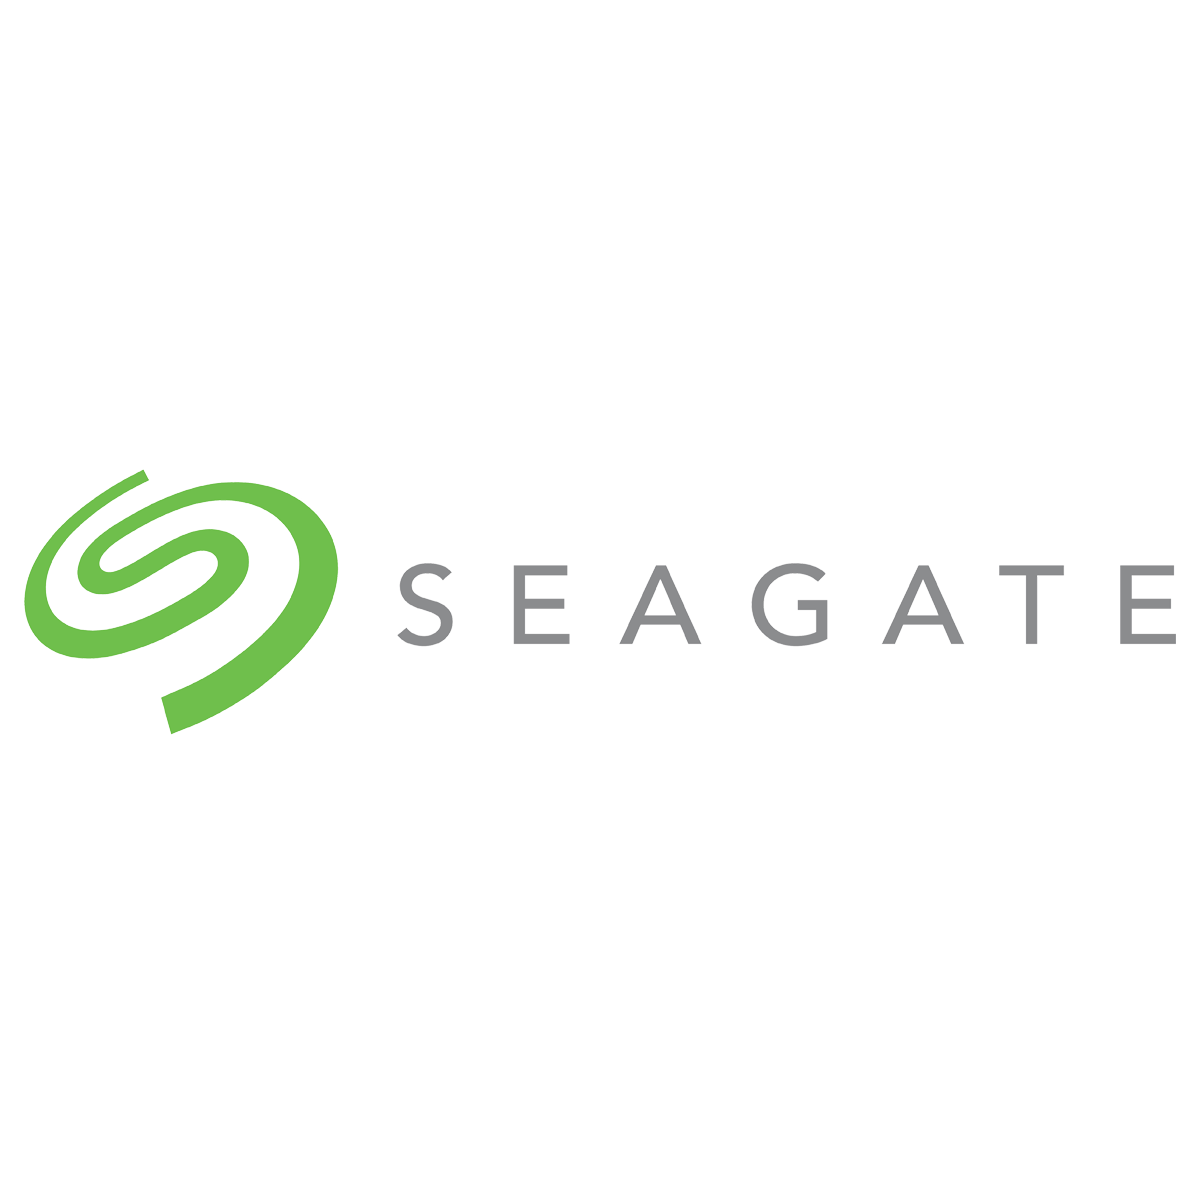 Firmenlogo der Firma Seagate